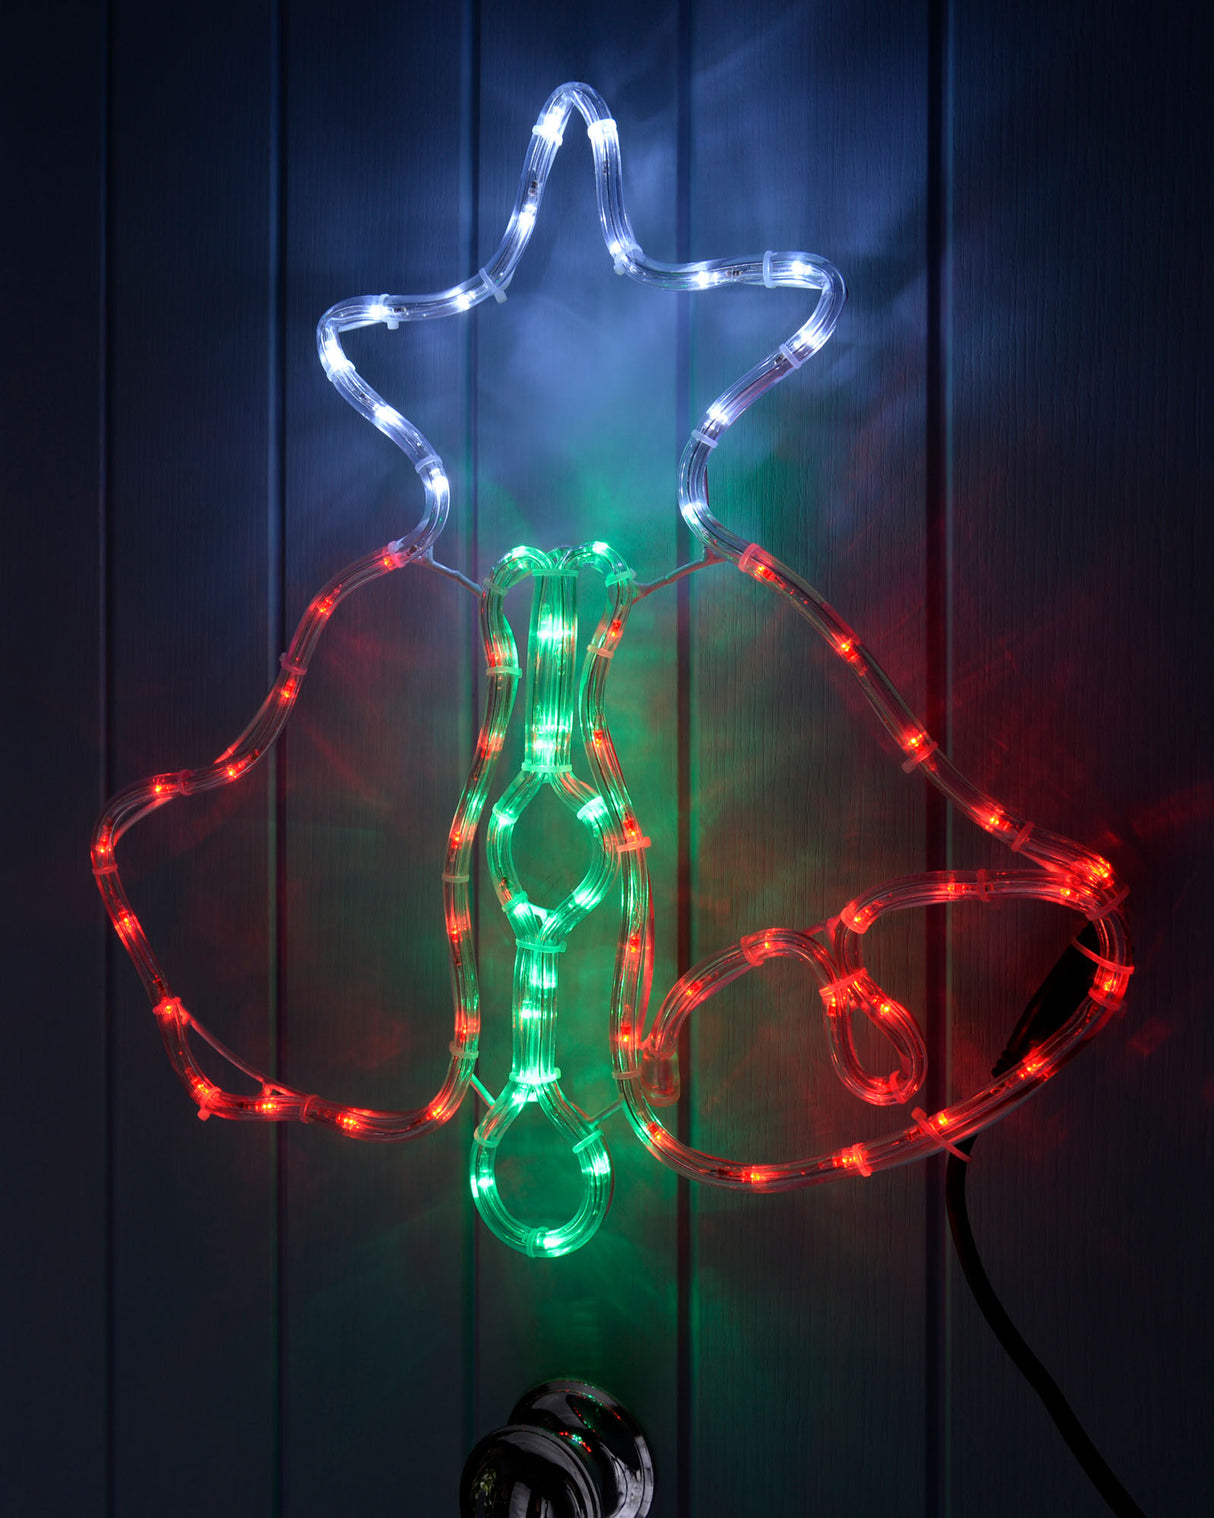 Bells & Star Rope Light Silhouette, Multi-Colour, 46 cm